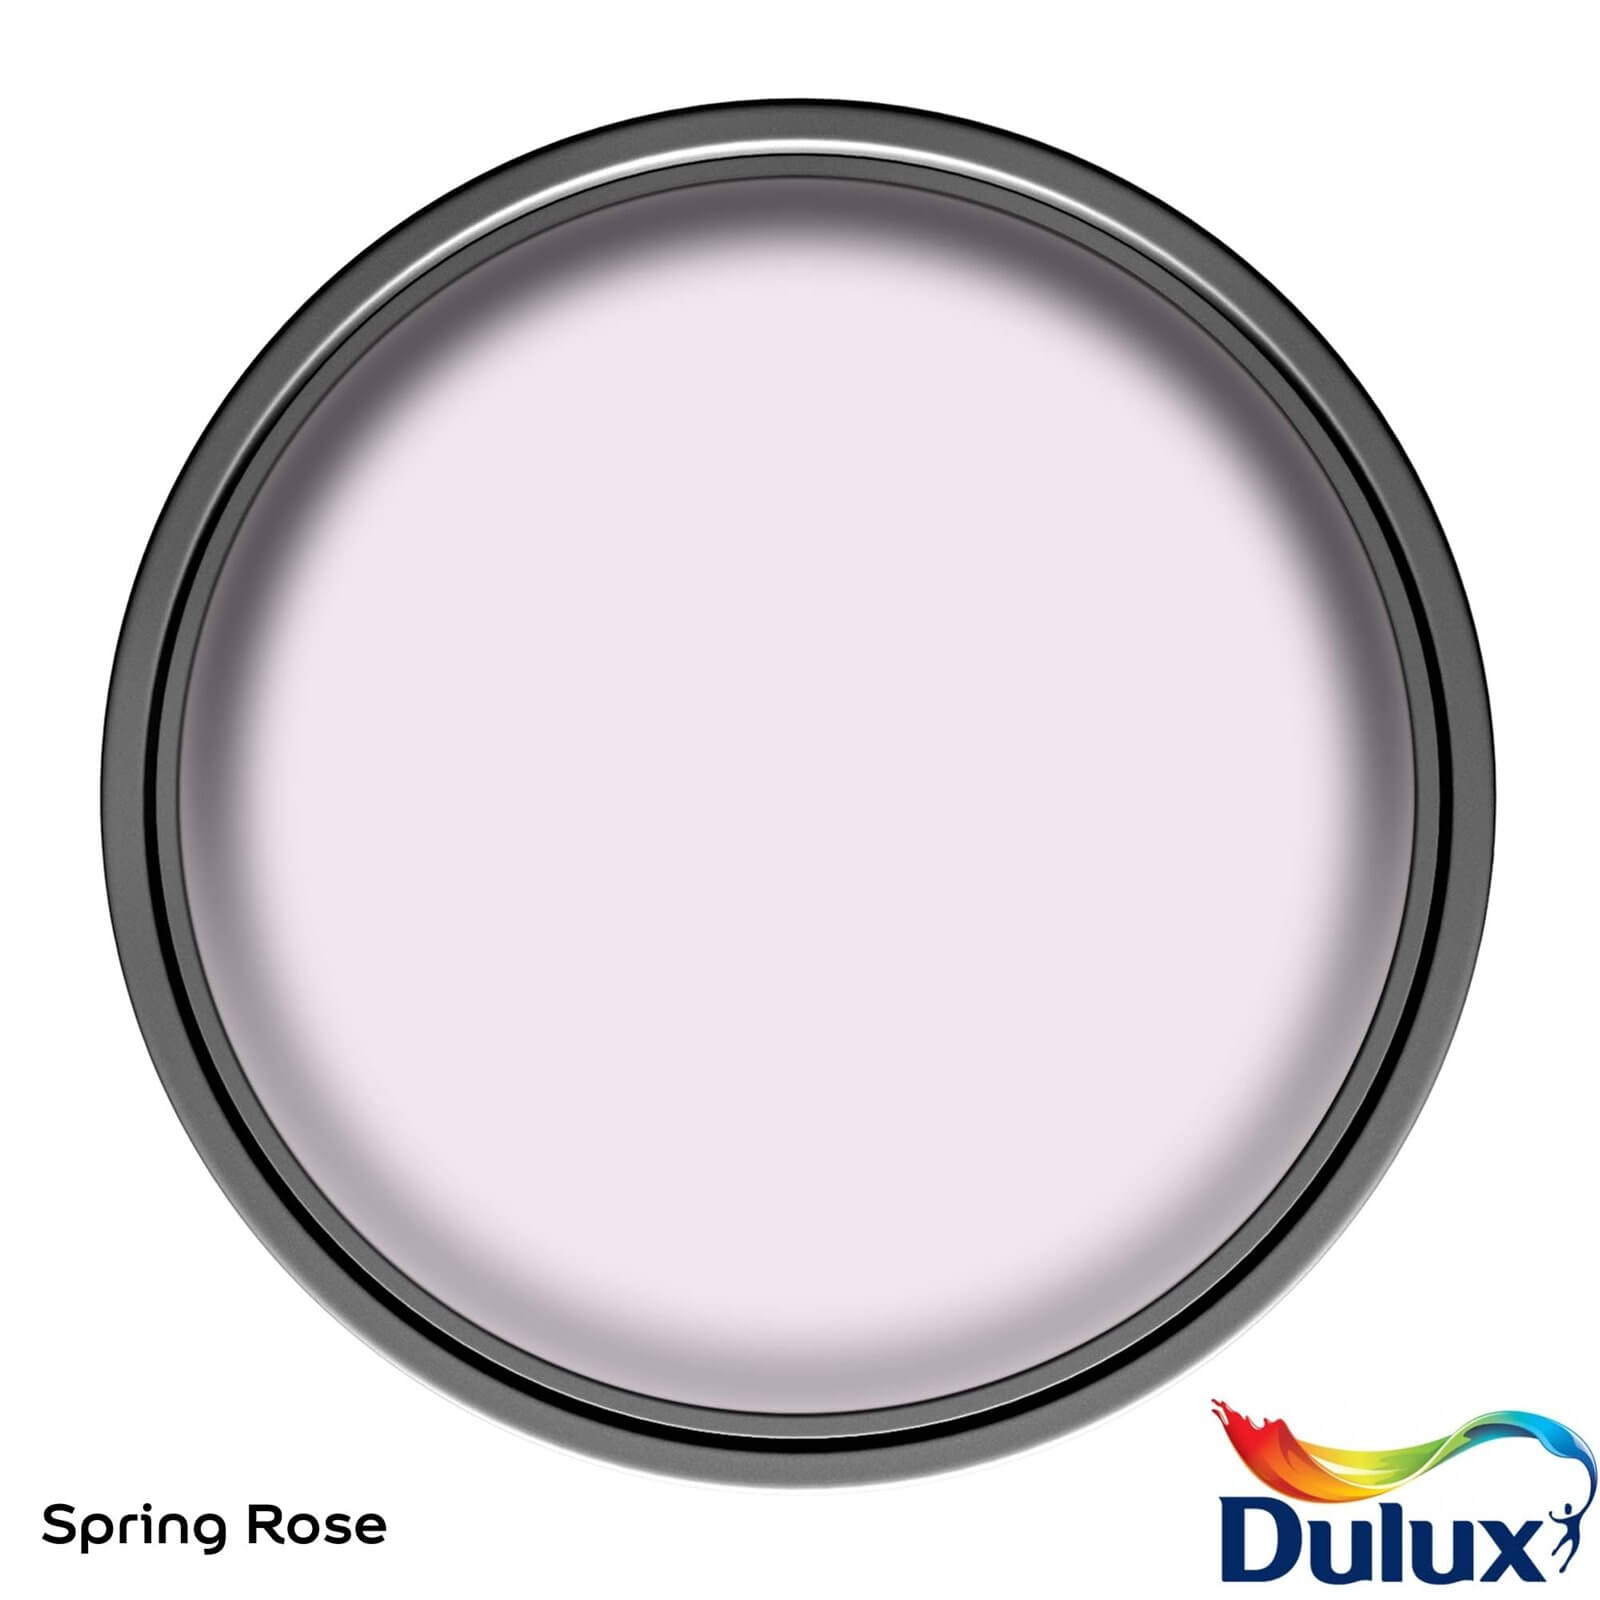 Dulux Light & Space Matt Emulsion Paint Spring Rose - 2.5L